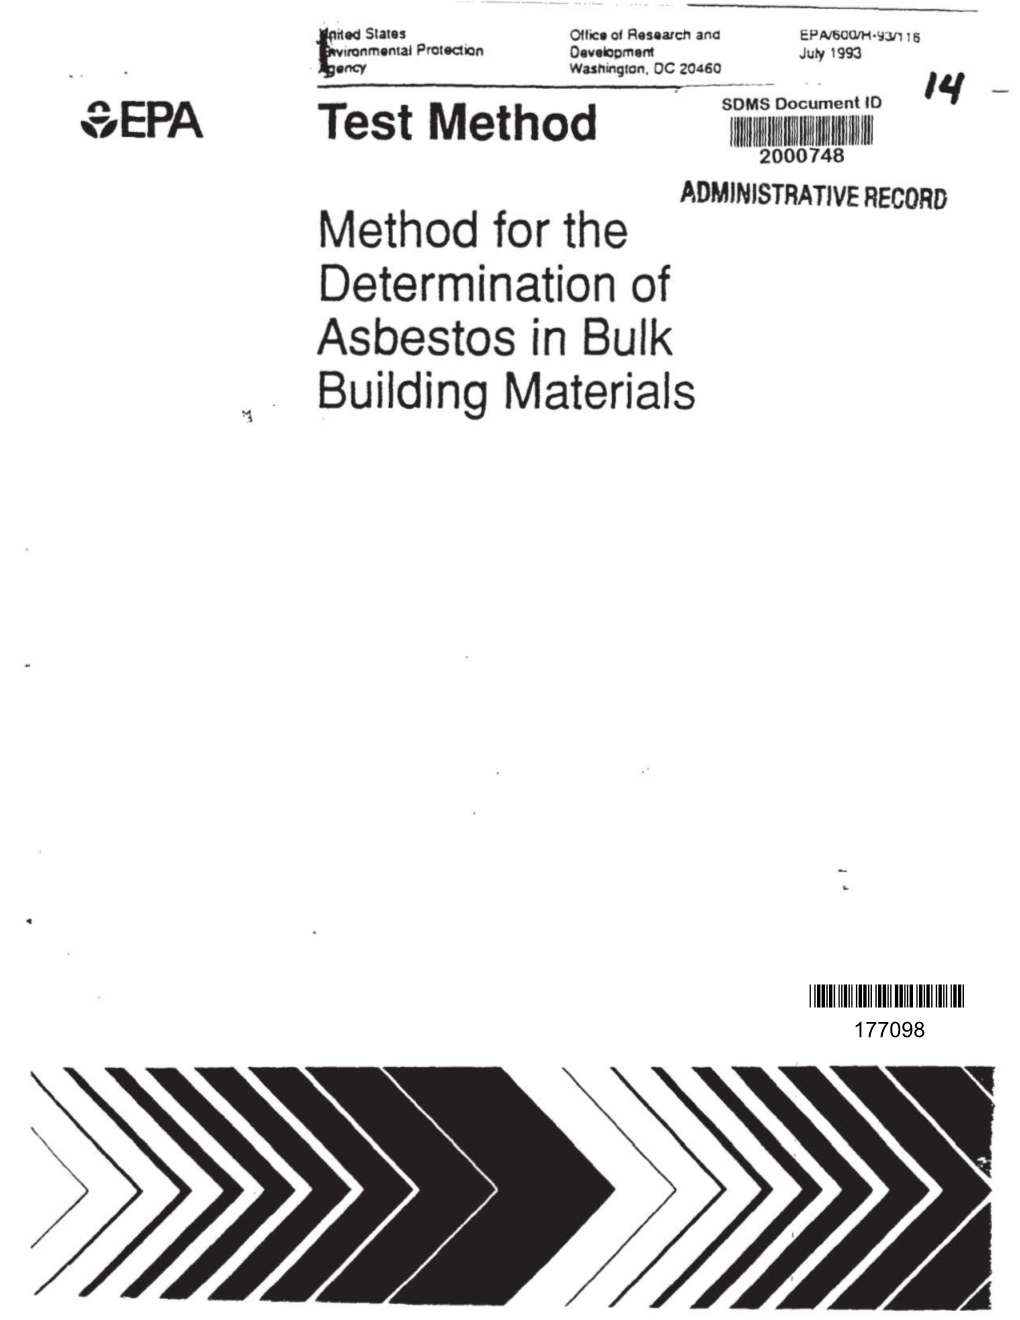 Method for the Determination of Asbestos in Bulk Building Materials